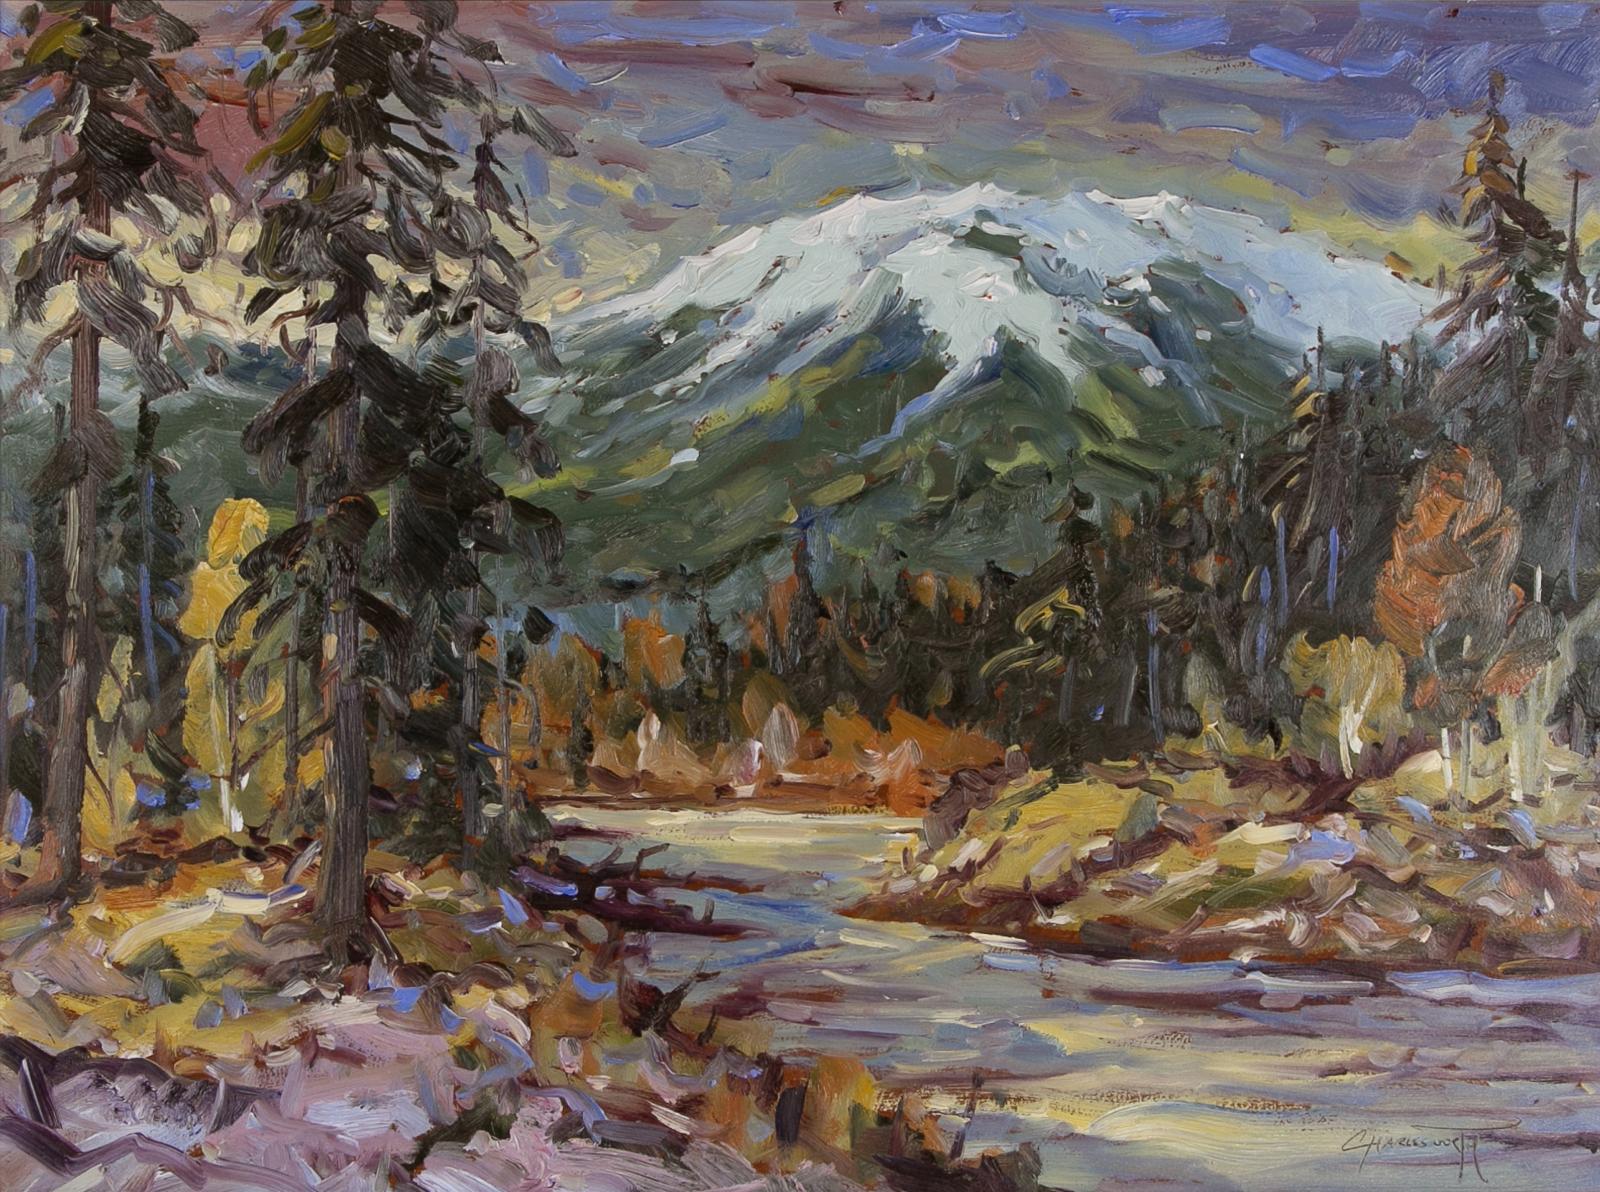 Rod Charlesworth (1955) - North Thompson, Snowy Peak